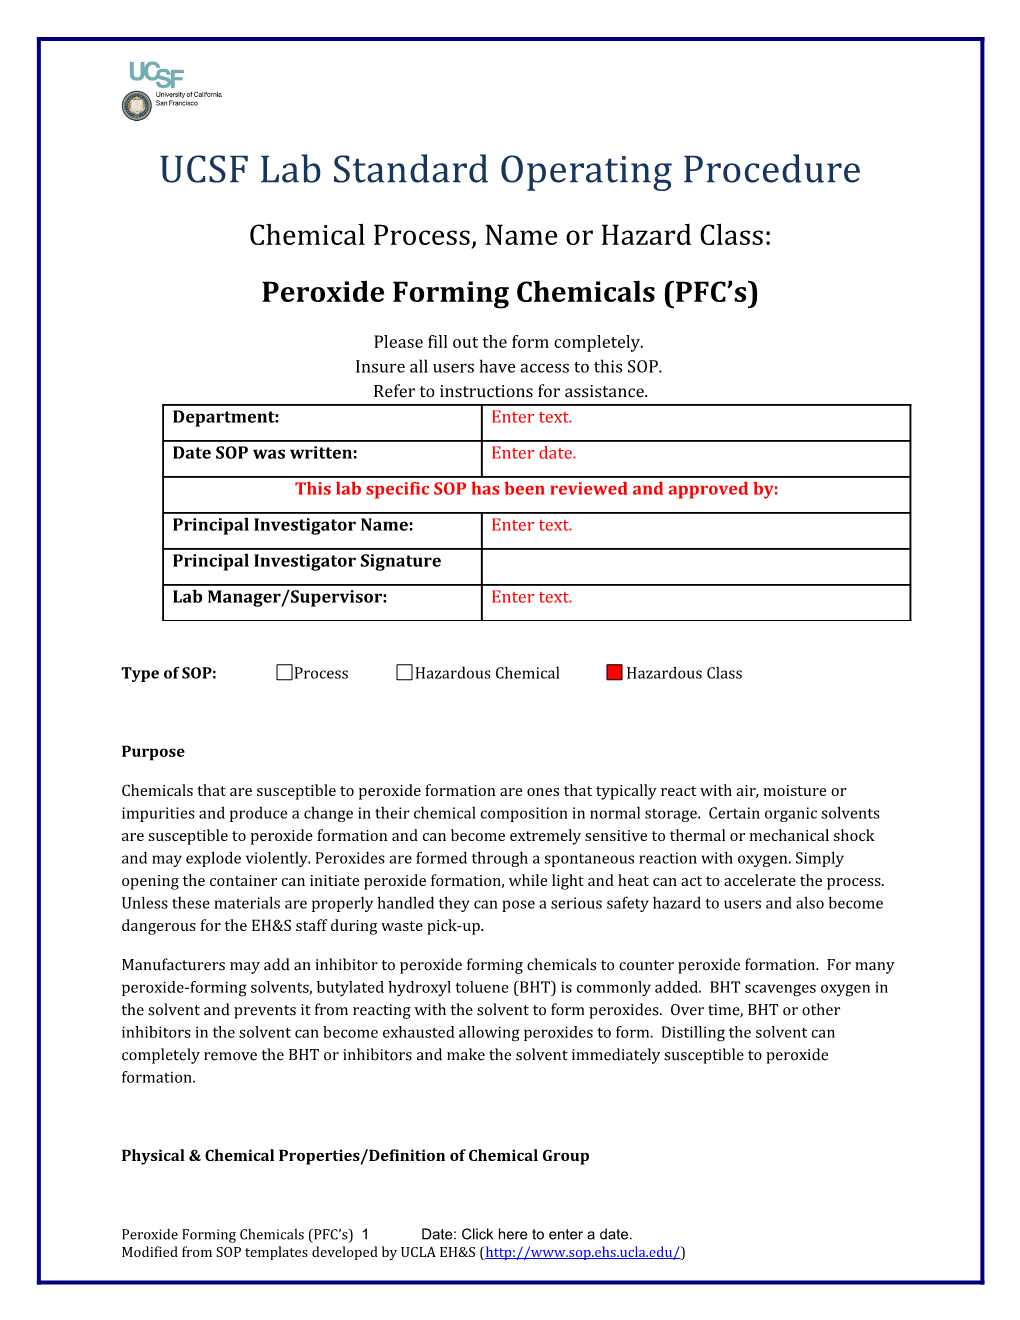 UCSF Lab Standard Operating Procedure s14